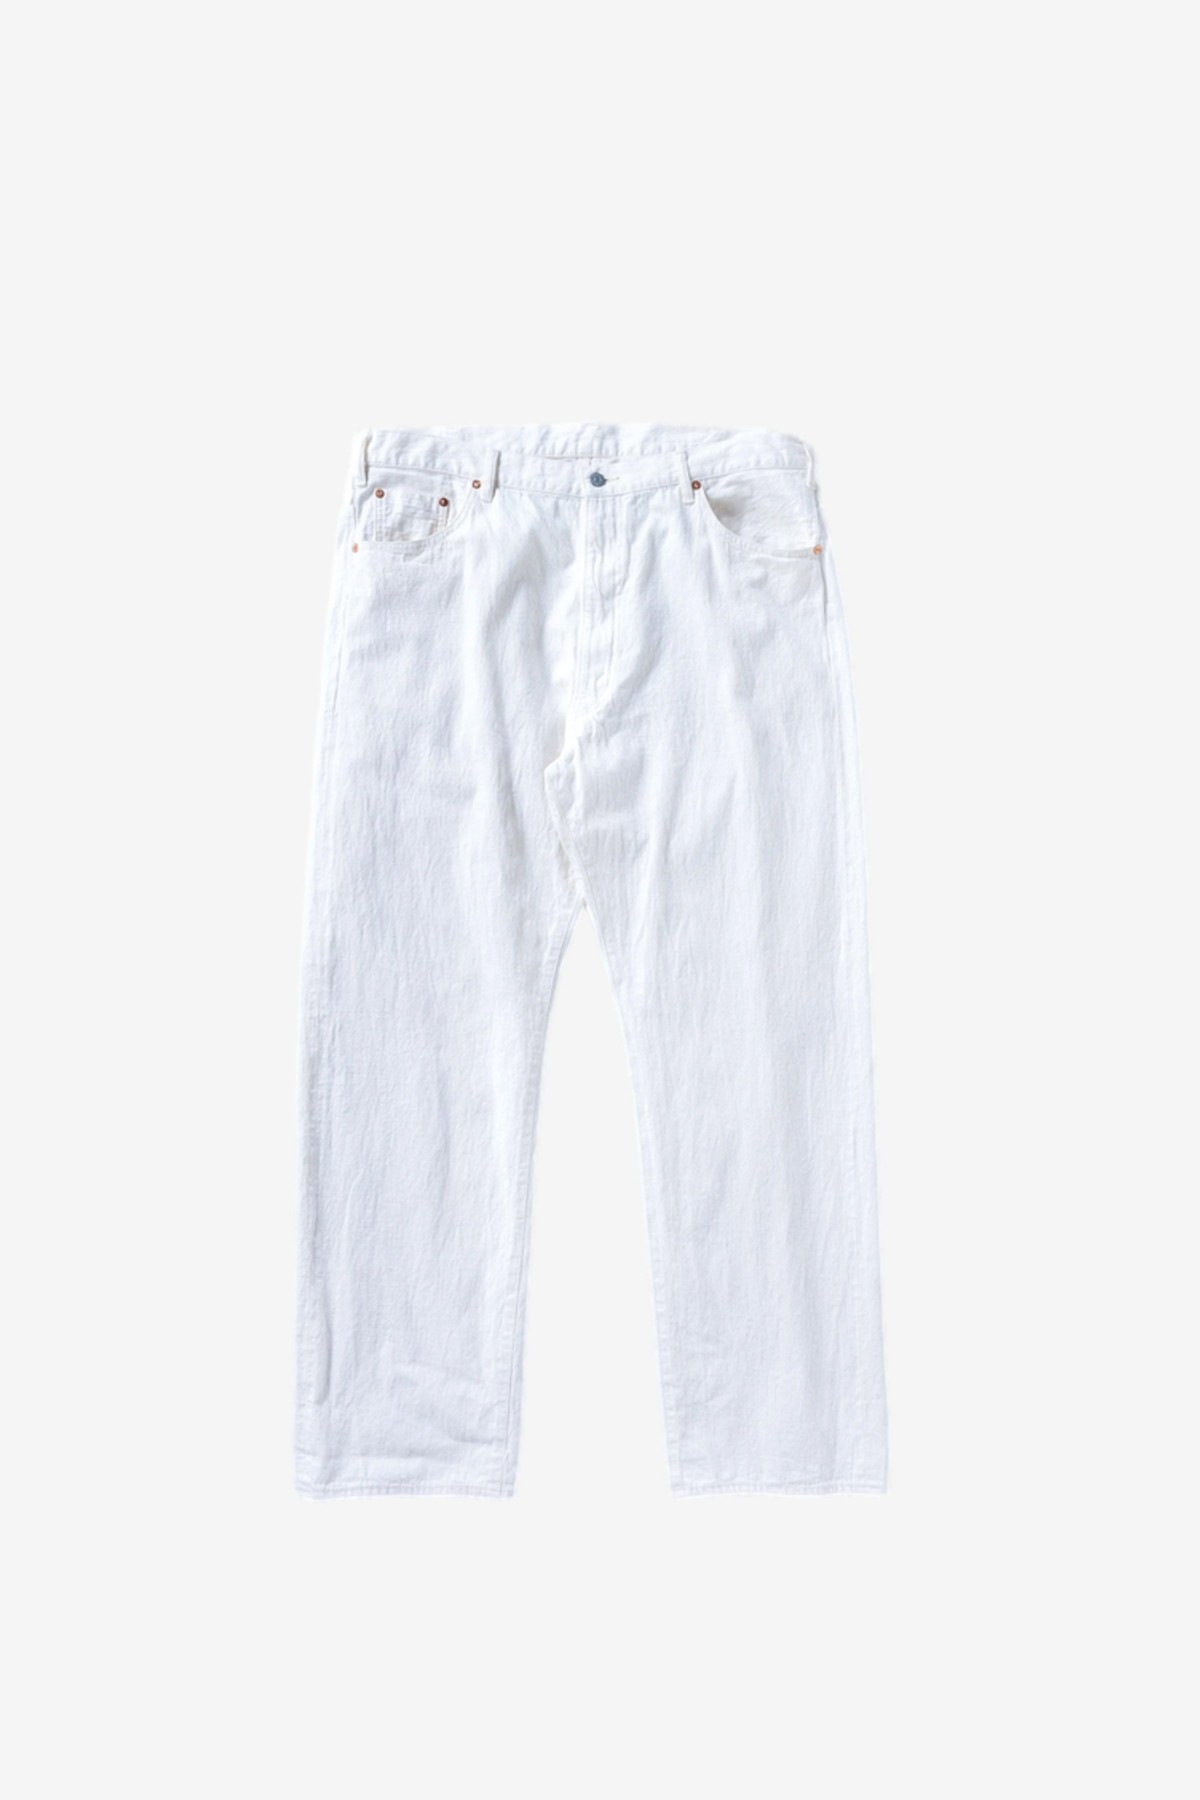 Buckleback 5PKT Denim Pants in White - Kaptain Sunshine | Afura Store